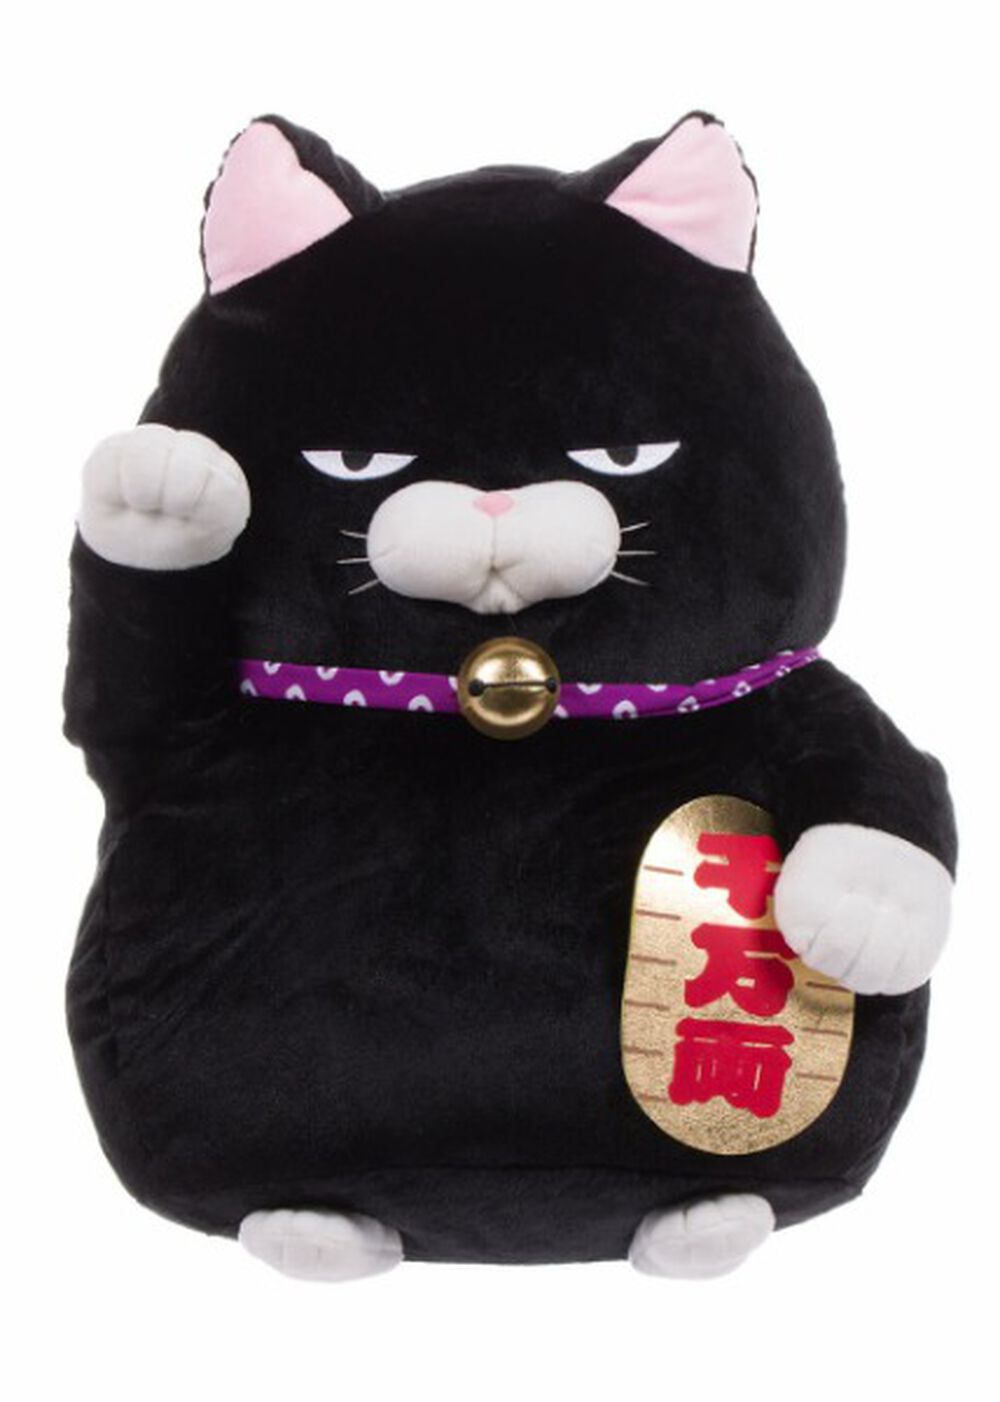 Kuromane Cat Plush Doll, Neko, Black, Amuse, Big Size, 20 Inches